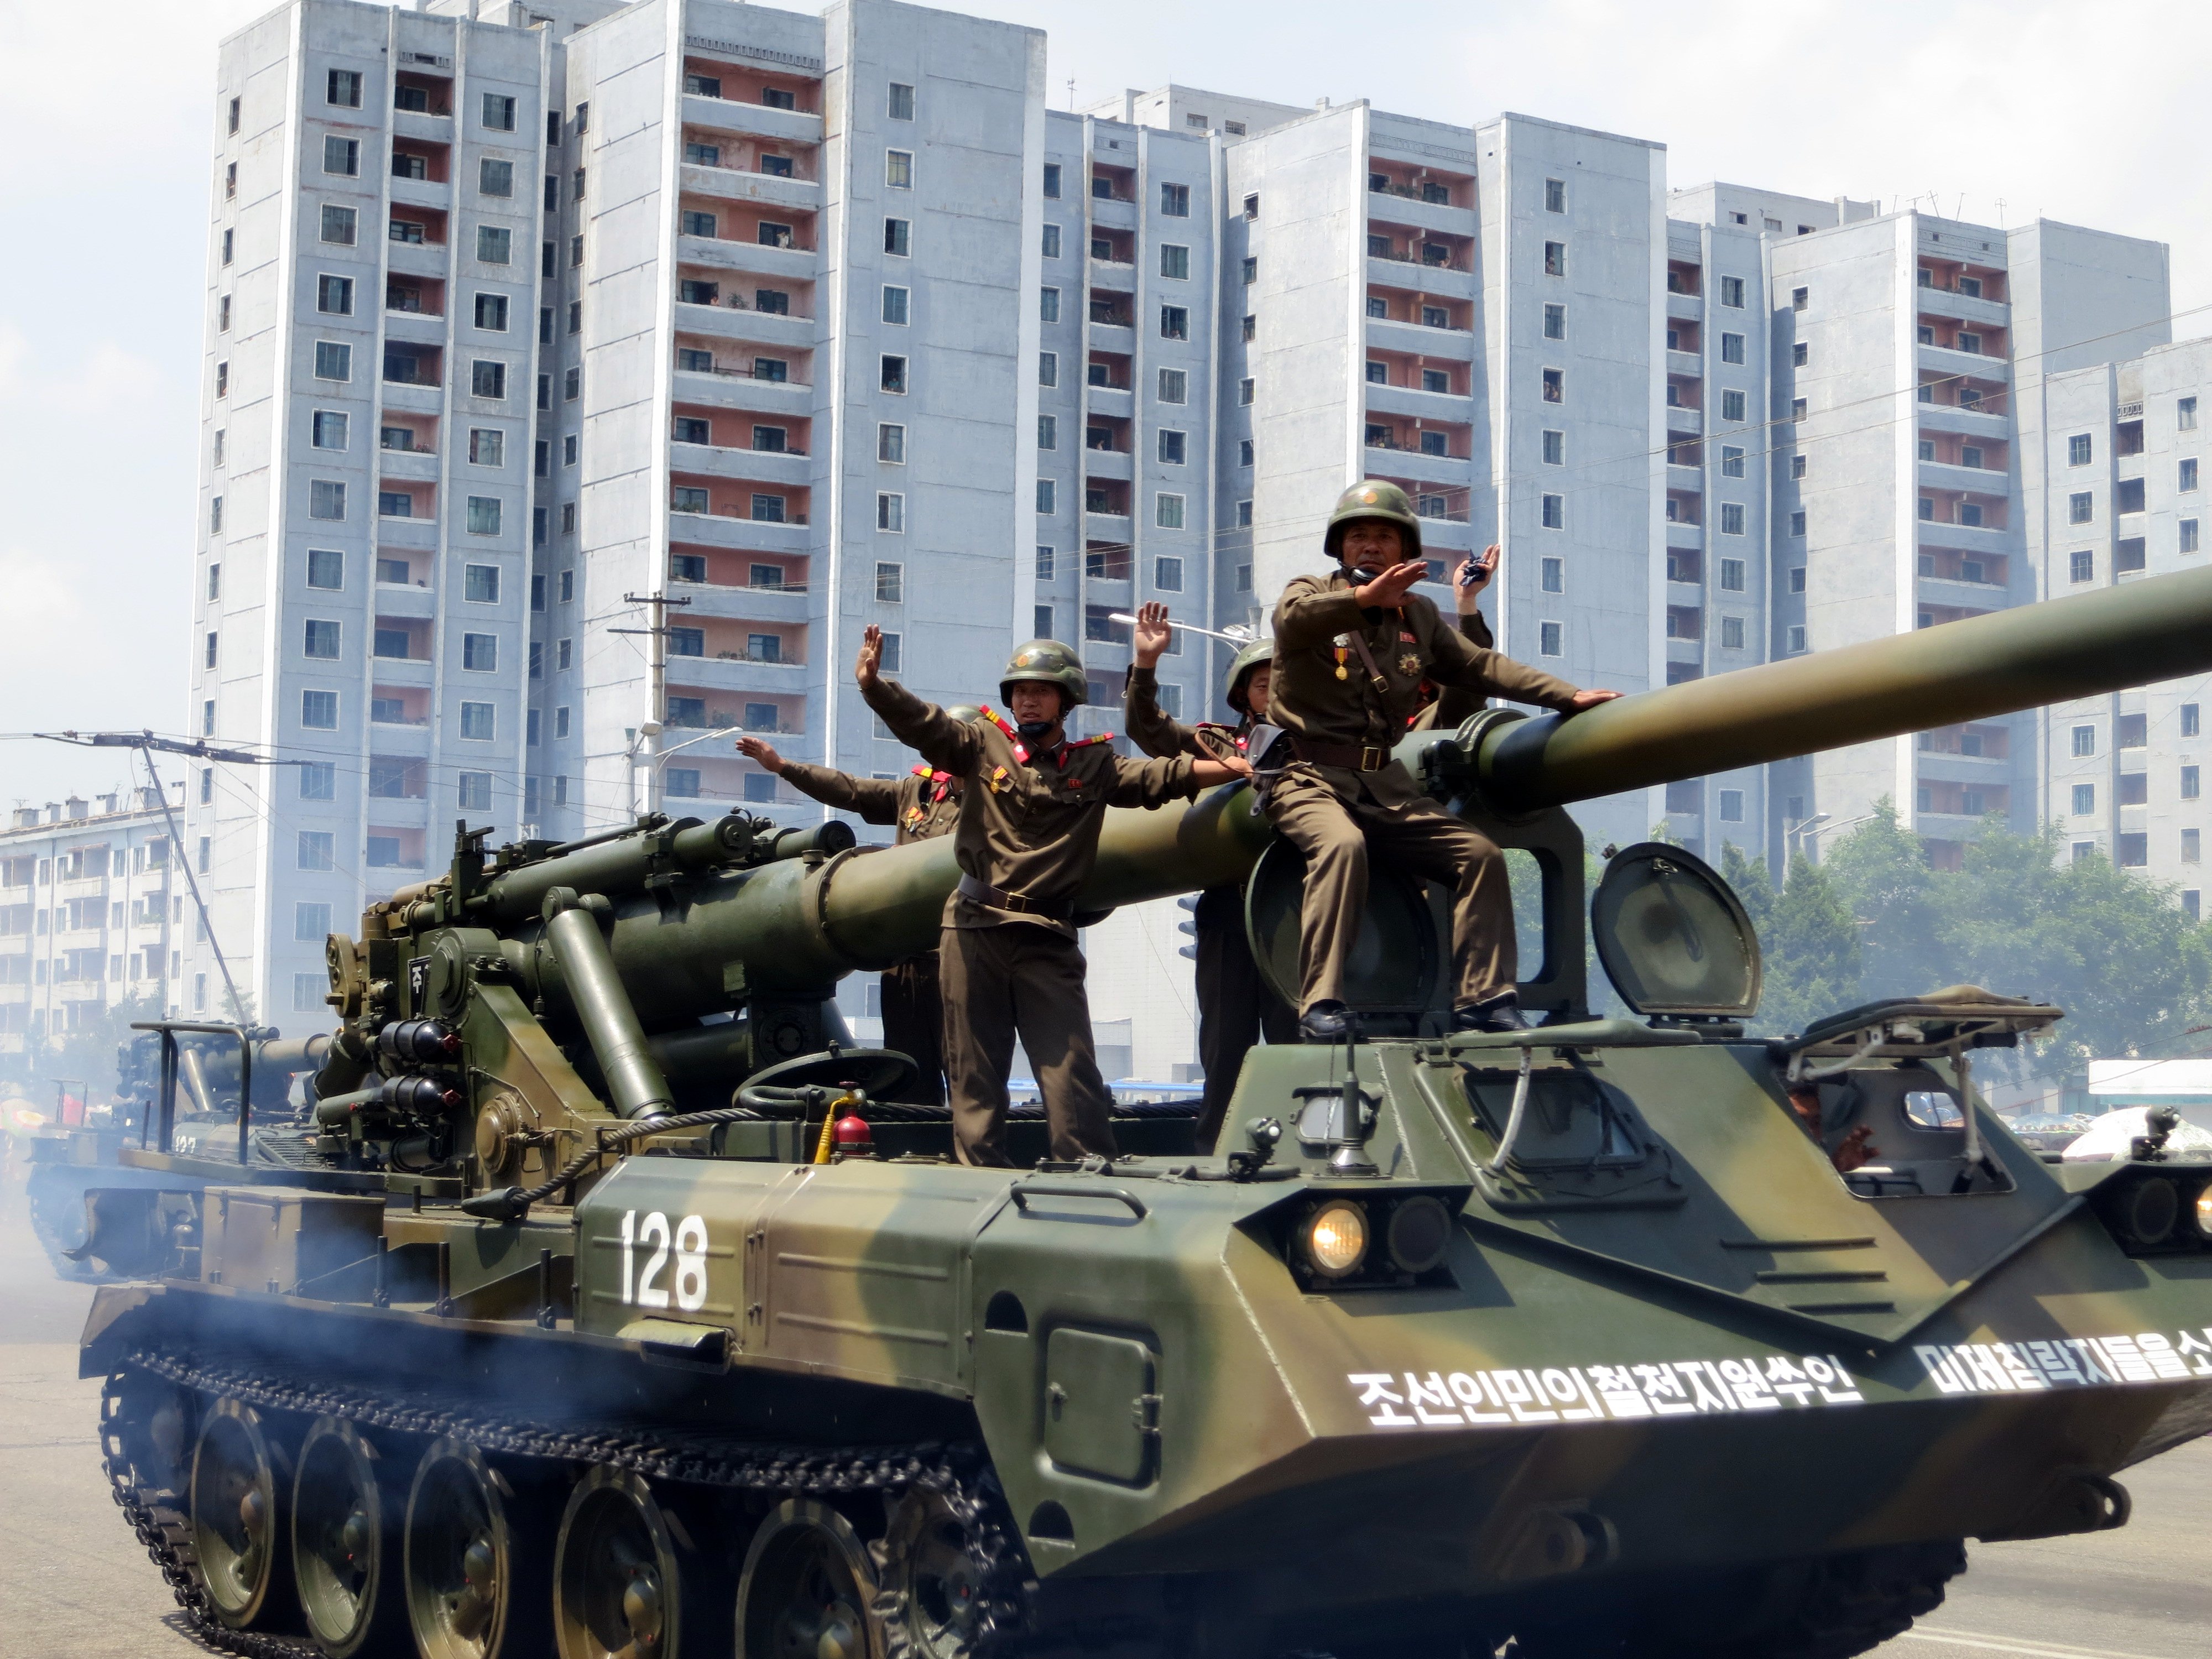 170mm_M1989_Koksan_-_North_Korea_Victory_Day-2013_01.jpg